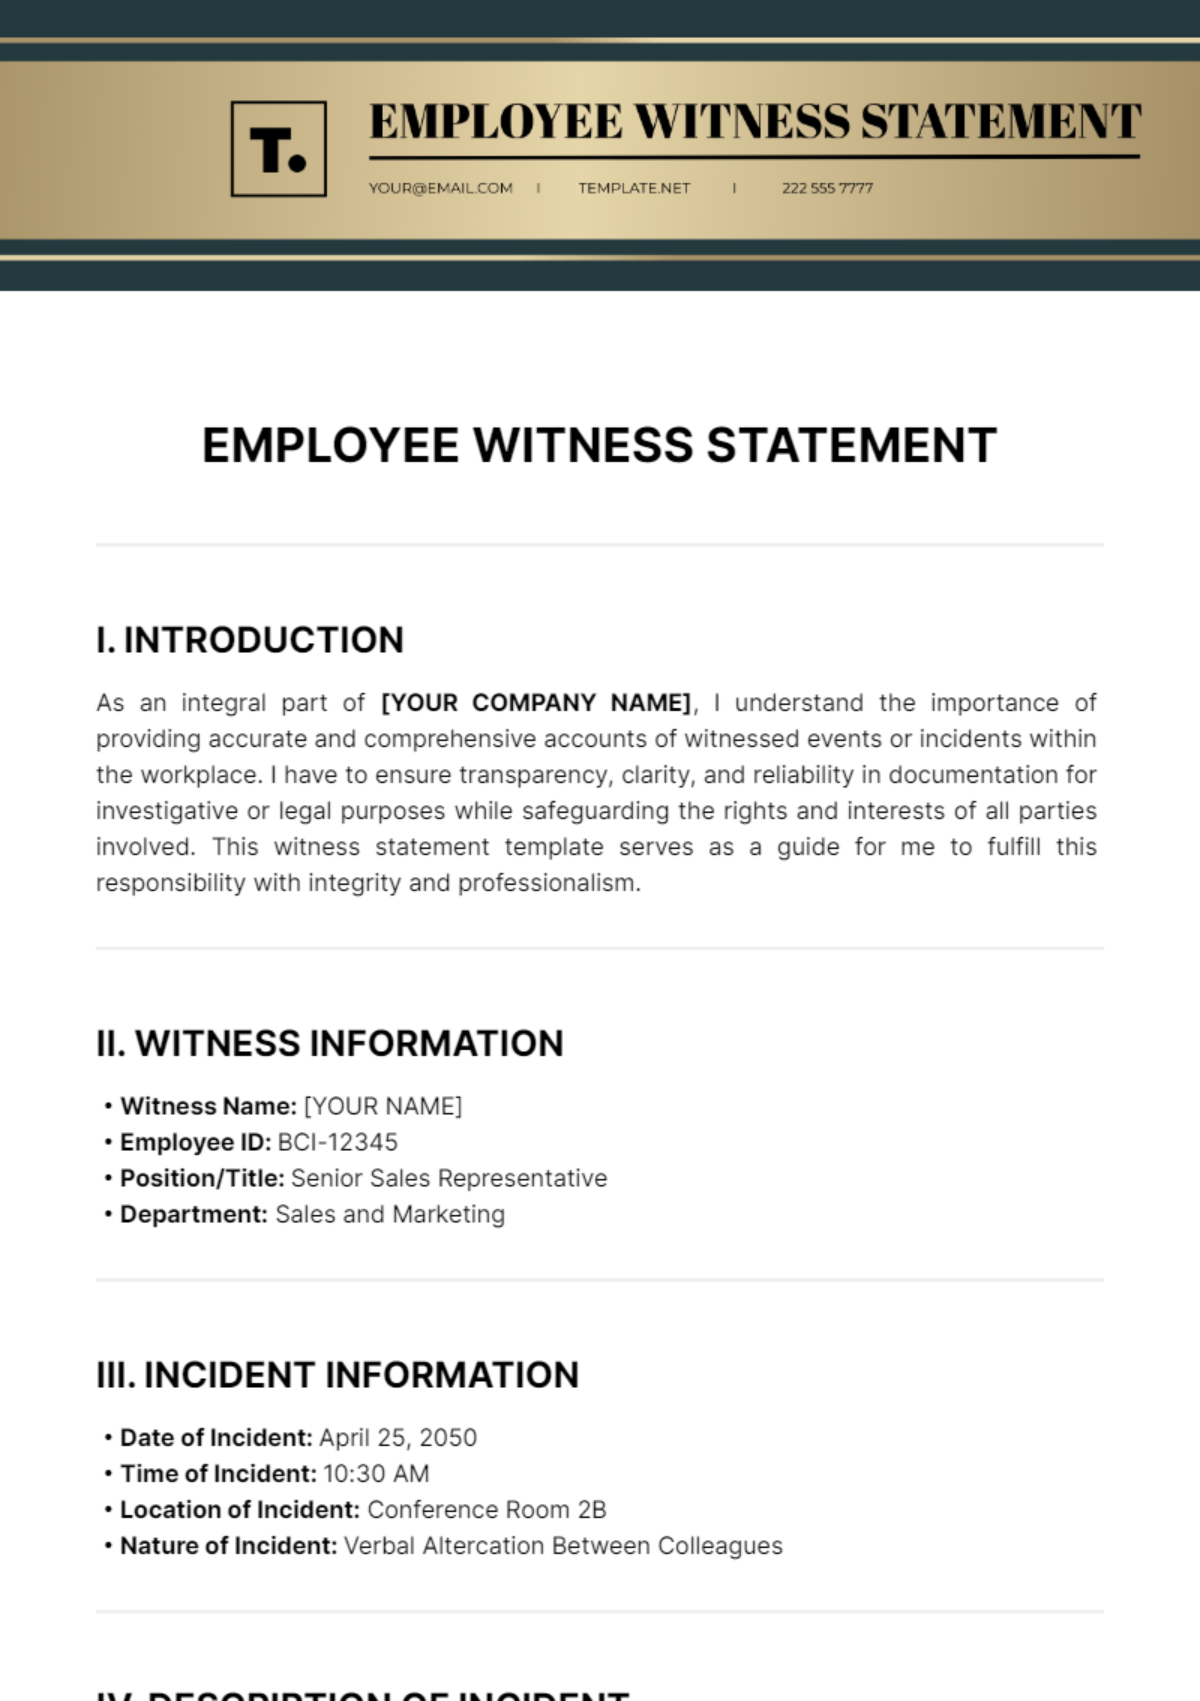 Employee Witness Statement Template